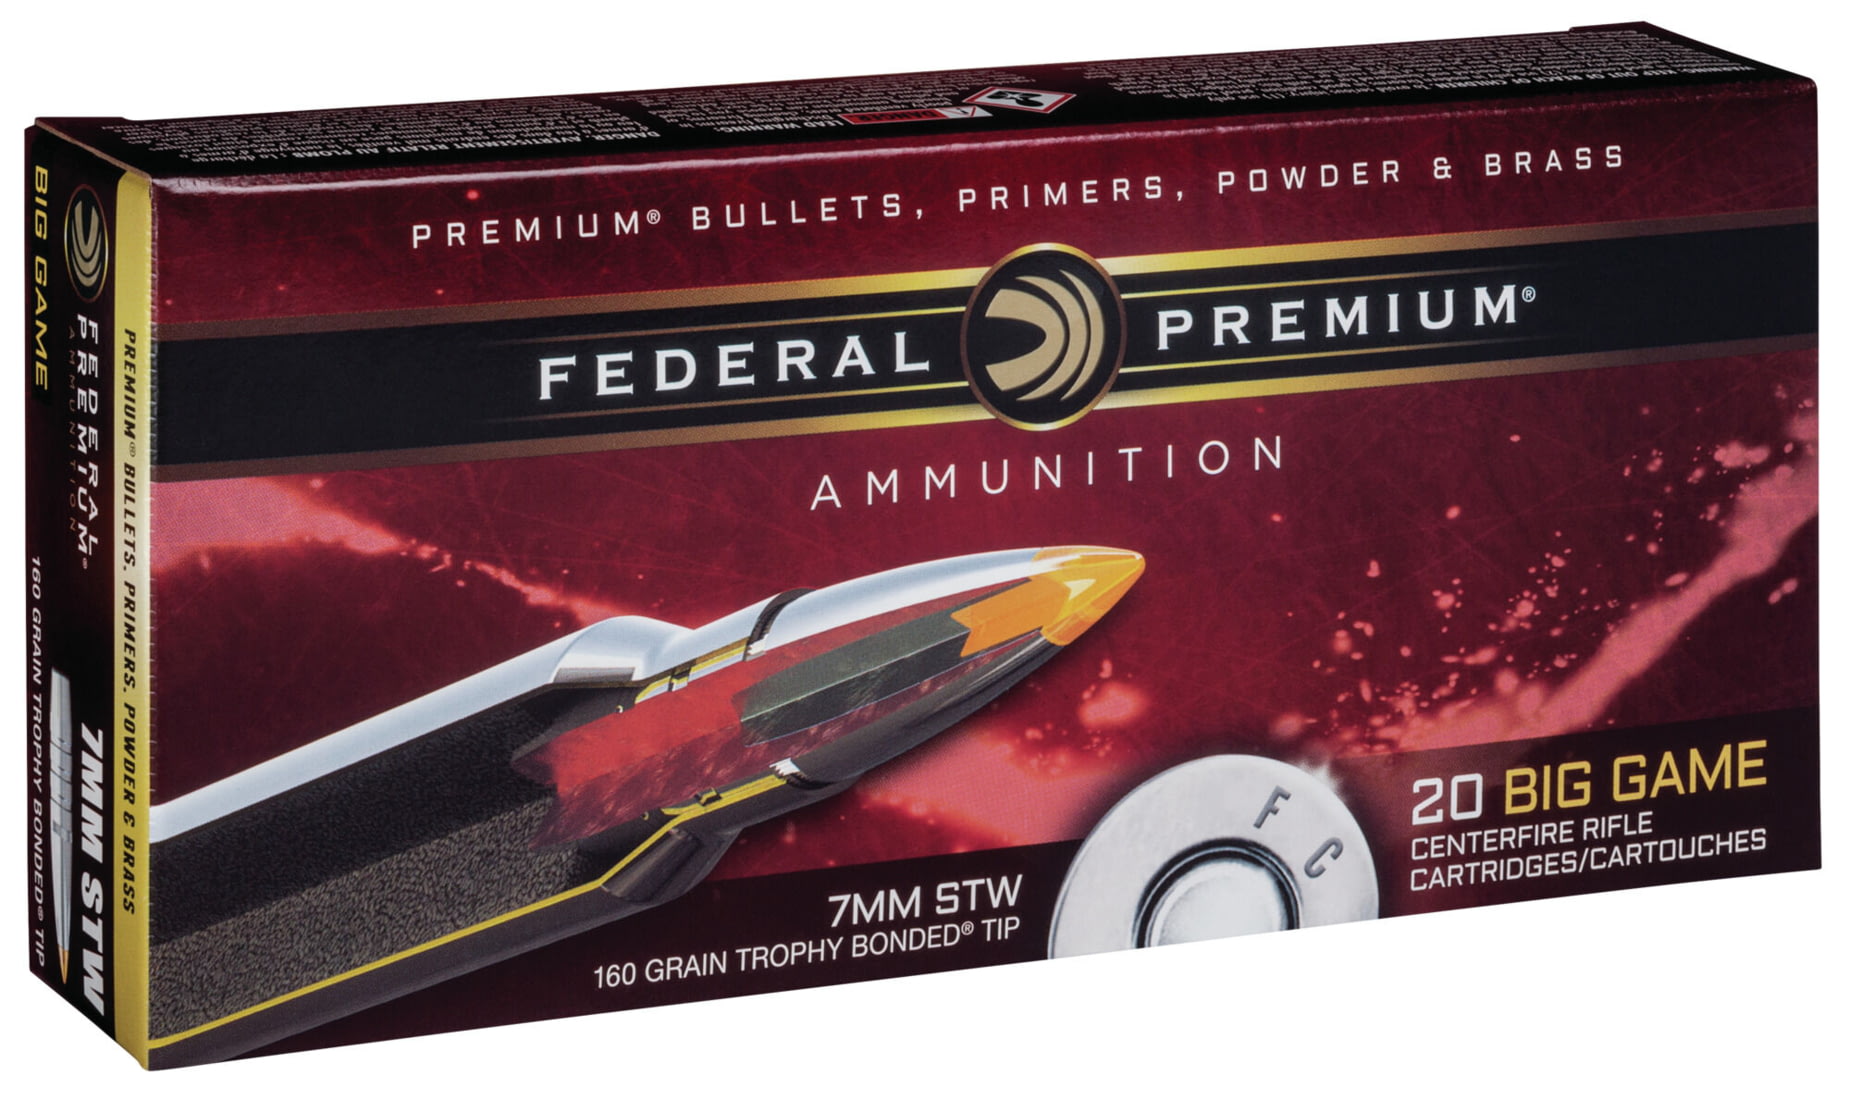 Federal Premium VITAL-SHOK 7mm Shooting Times Westerner 160 grain Trophy Bonded Tip Centerfire Rifle Ammunition